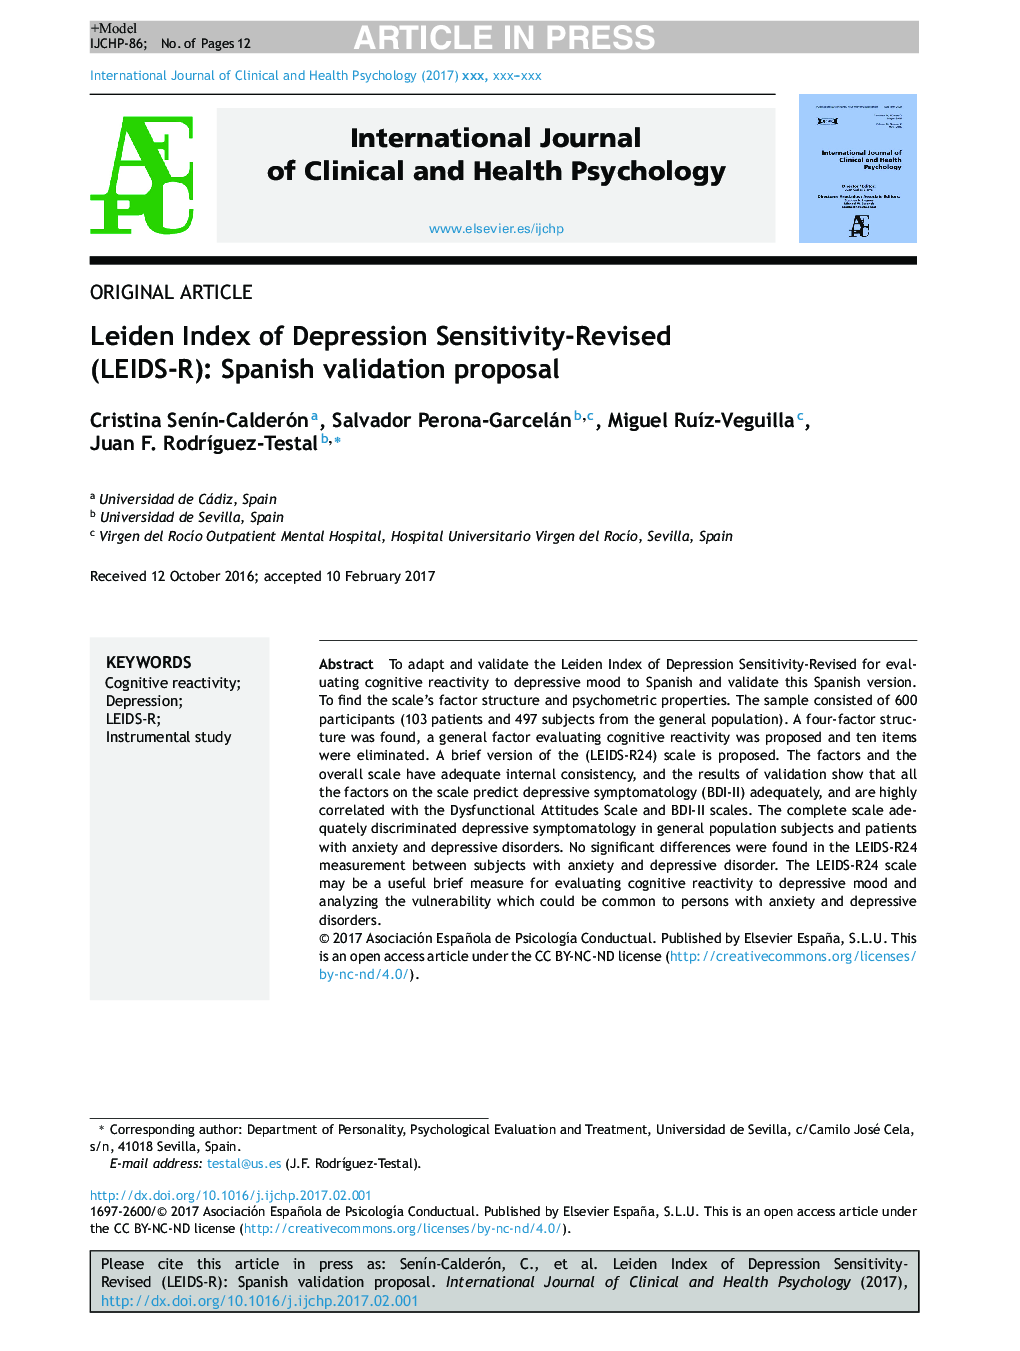 Leiden Index of Depression Sensitivity-Revised (LEIDS-R): Spanish validation proposal